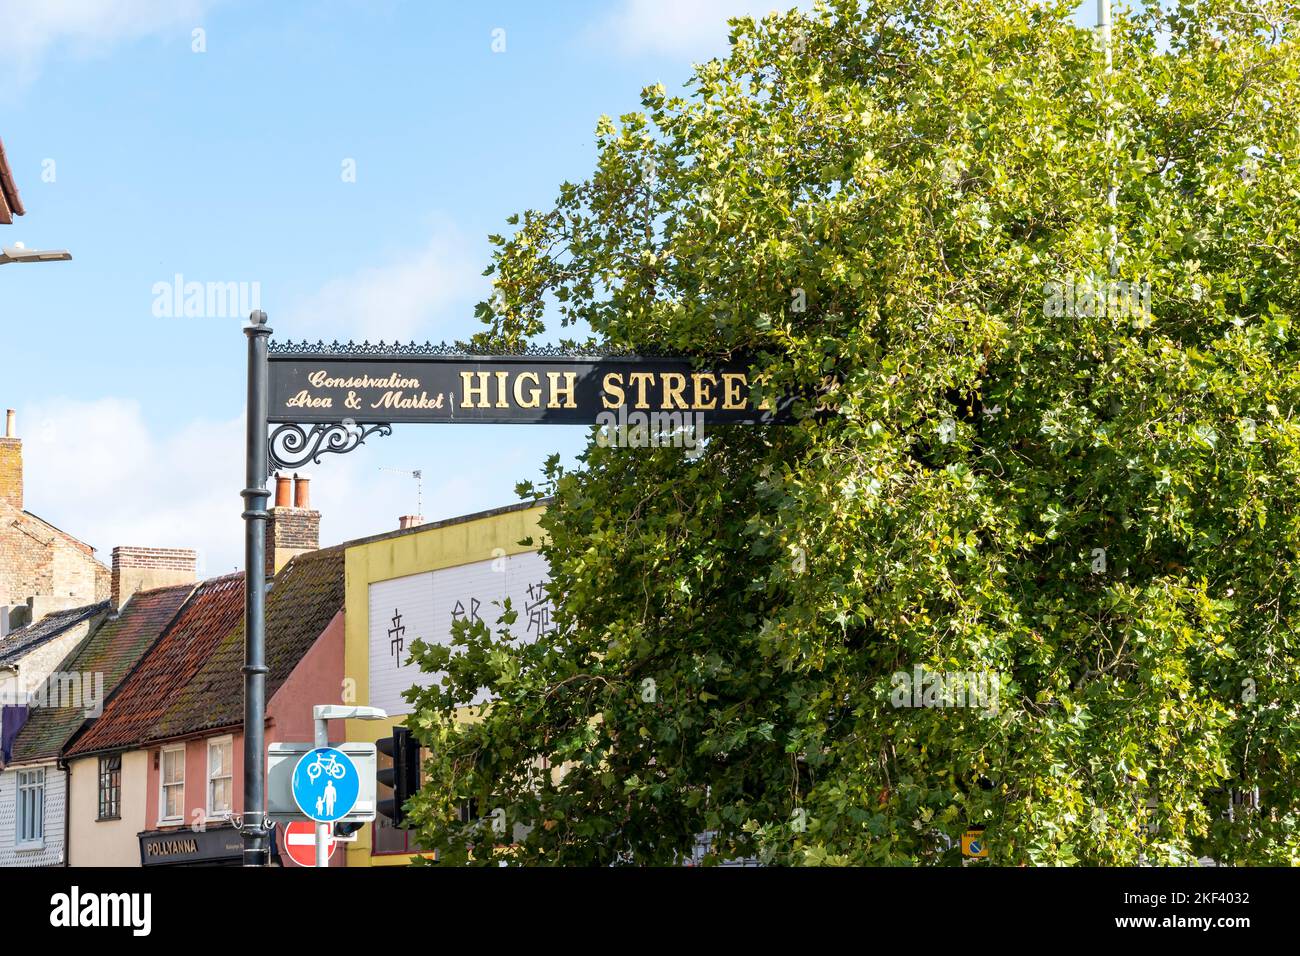 High Street Conservation Area & Market Schild, High Street Lowestoft suffolk 2022 Stockfoto